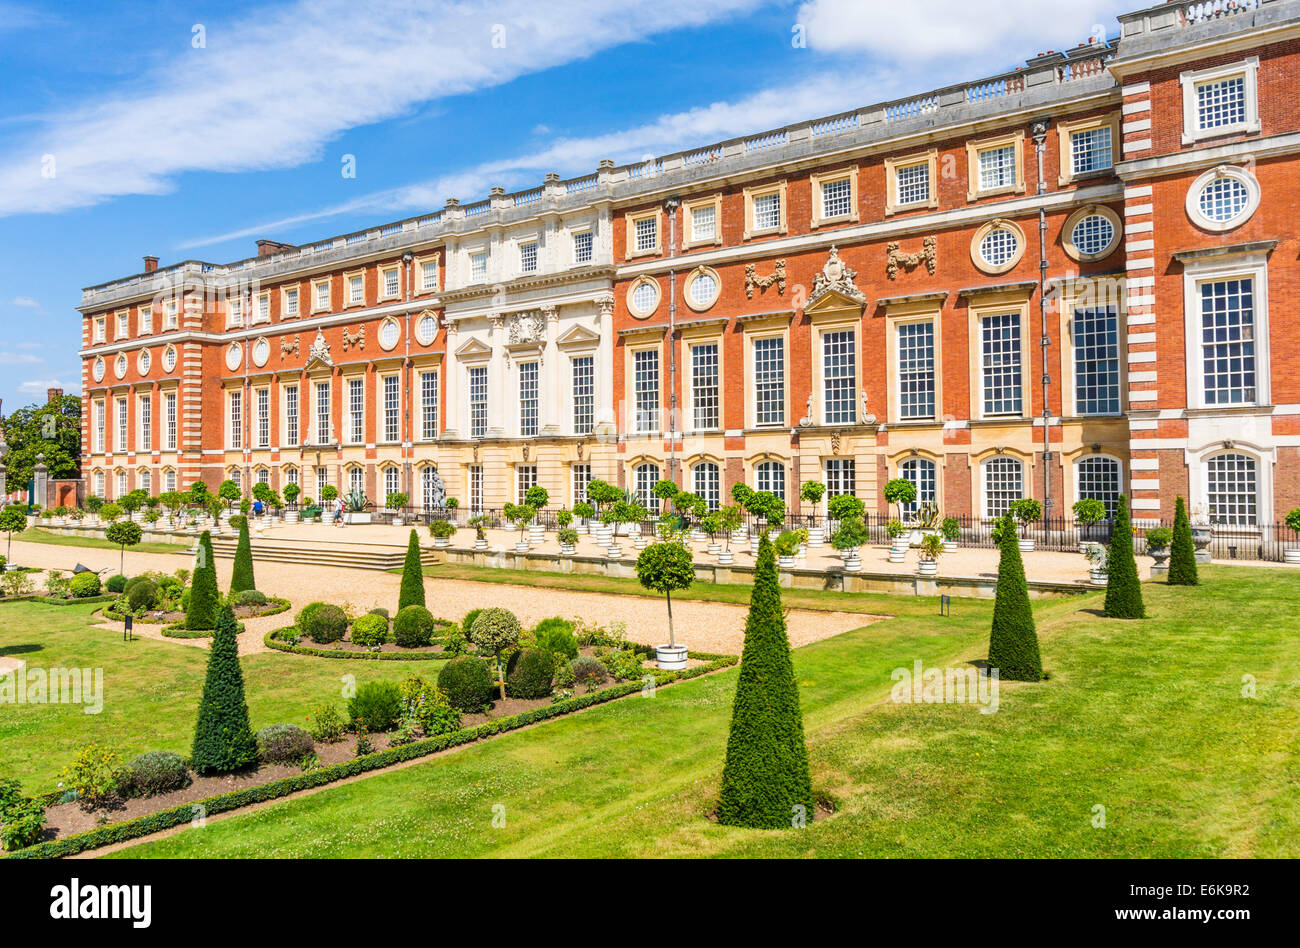 Hampton Court Palace South Front and Privy Garden London England UK GB EU Europe Stock Photo